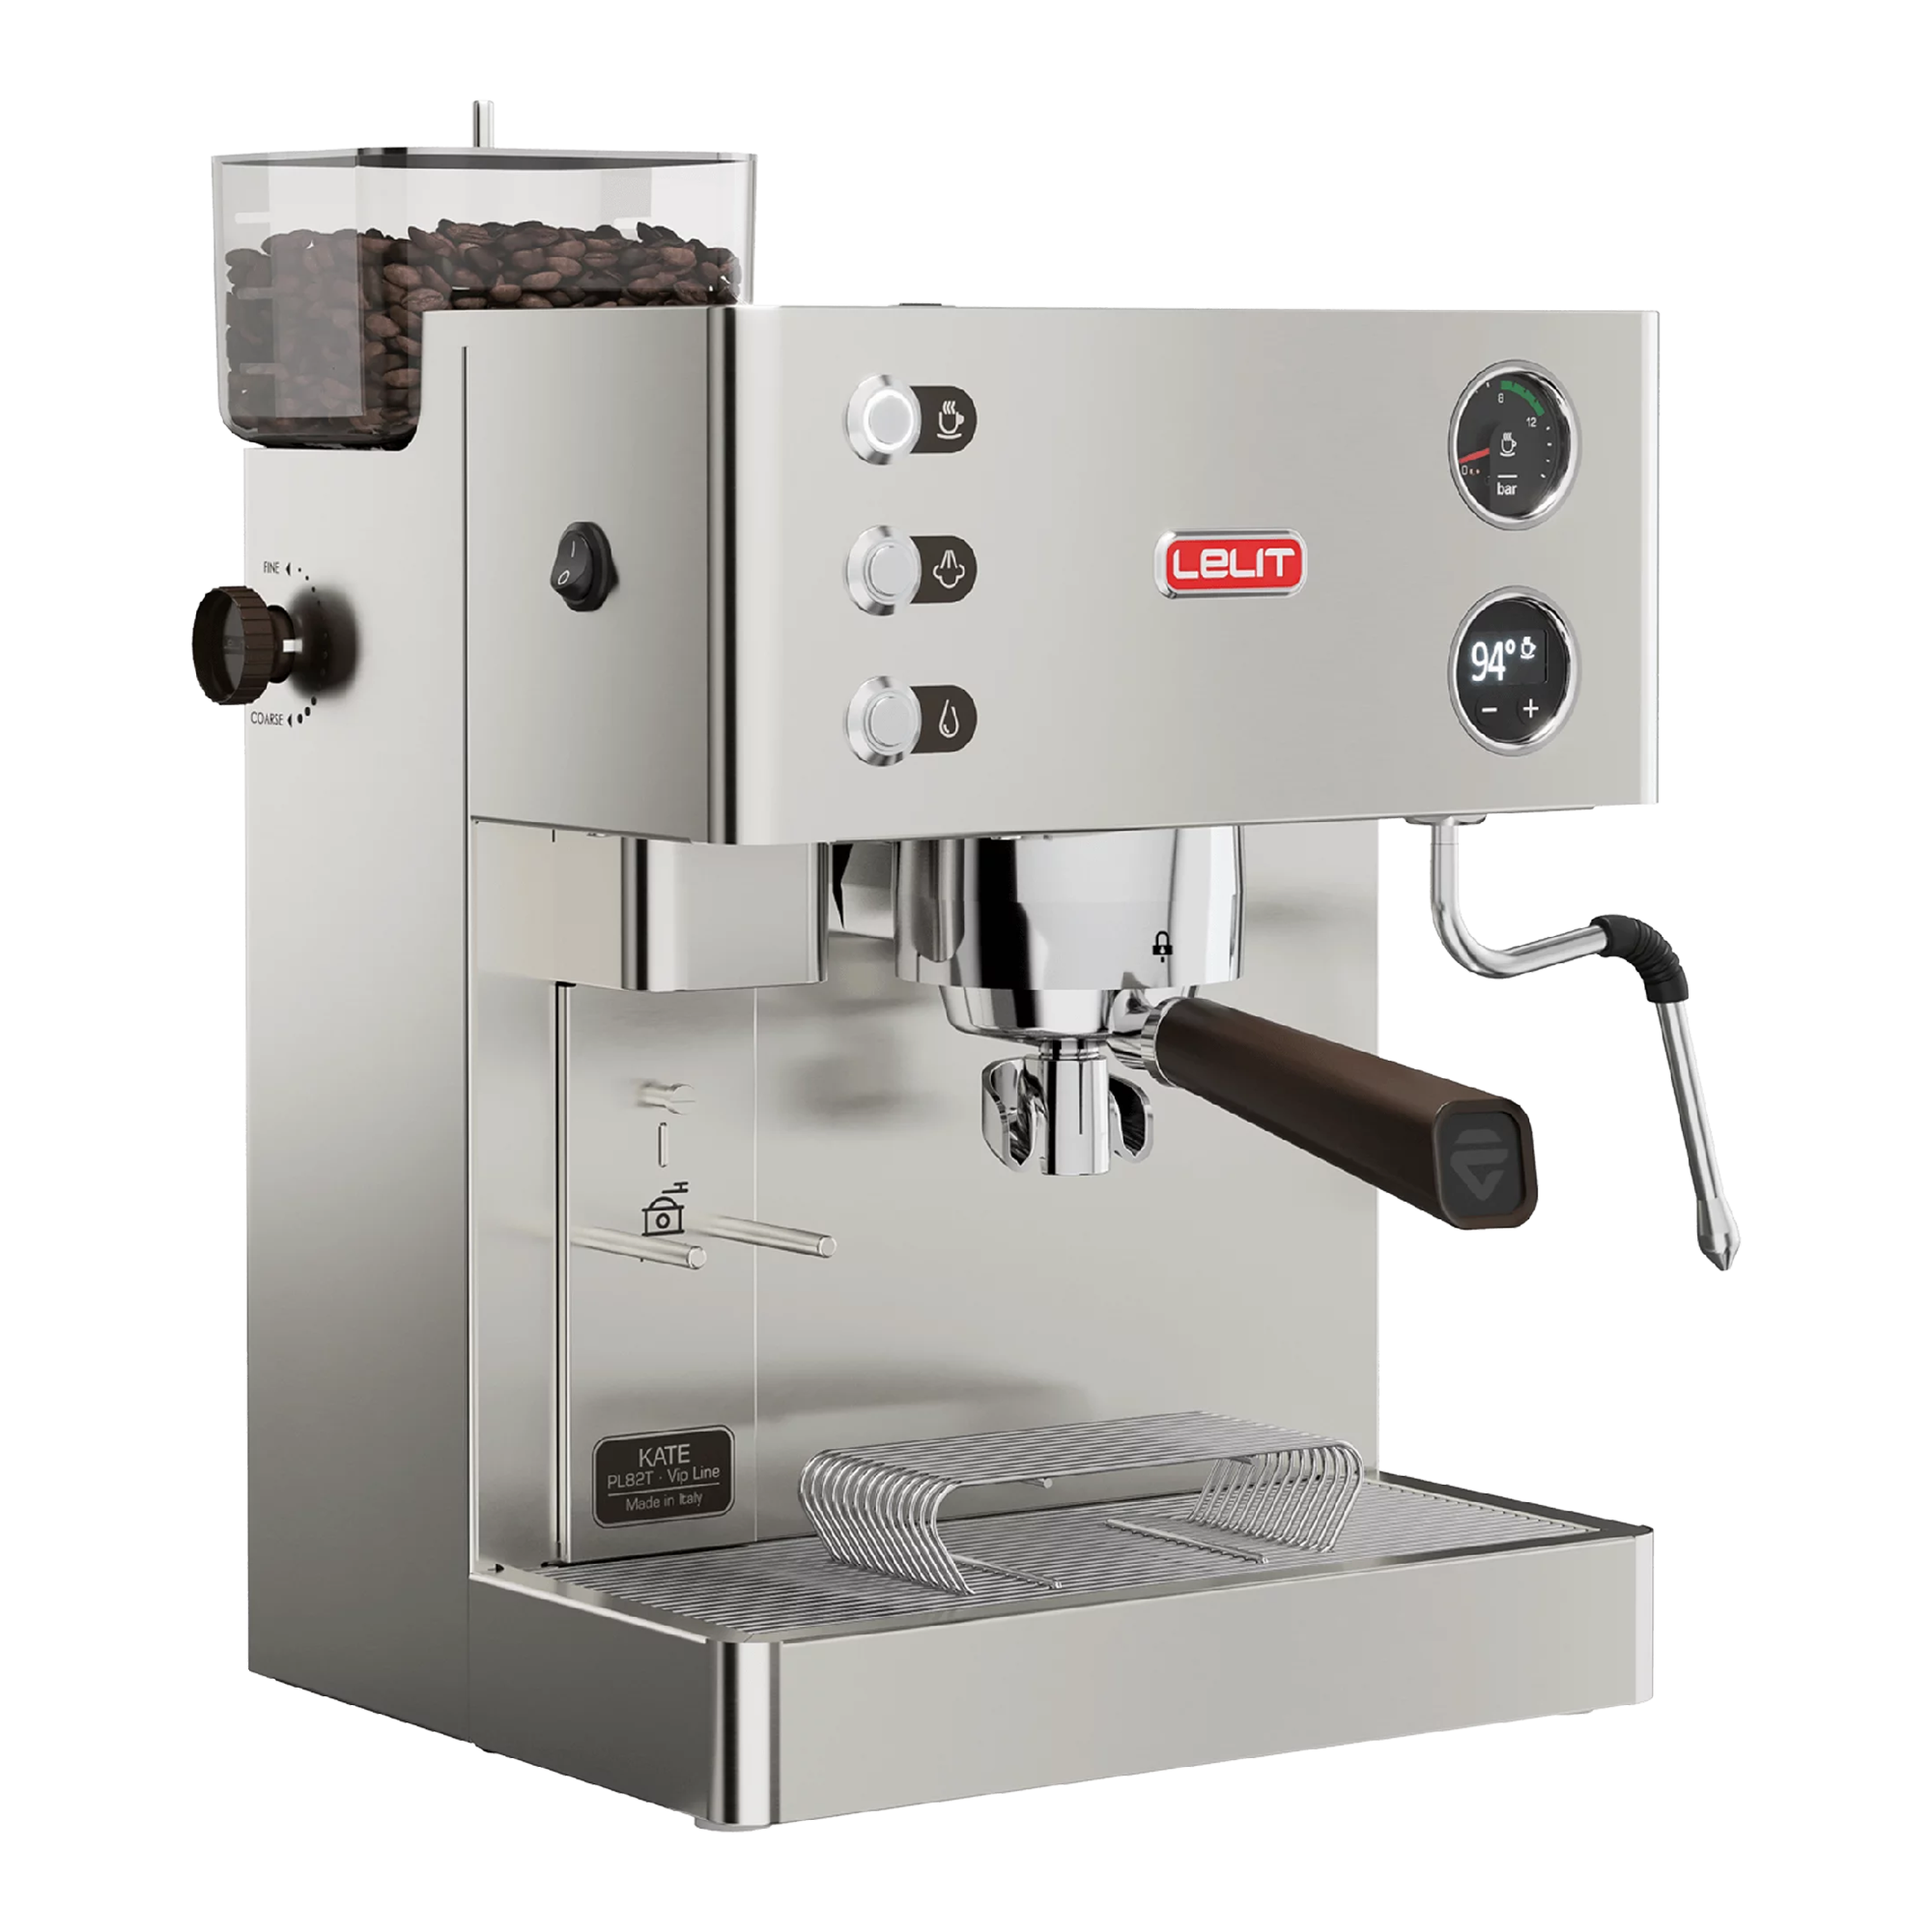 Lelit Kate Automatic Espresso Machine